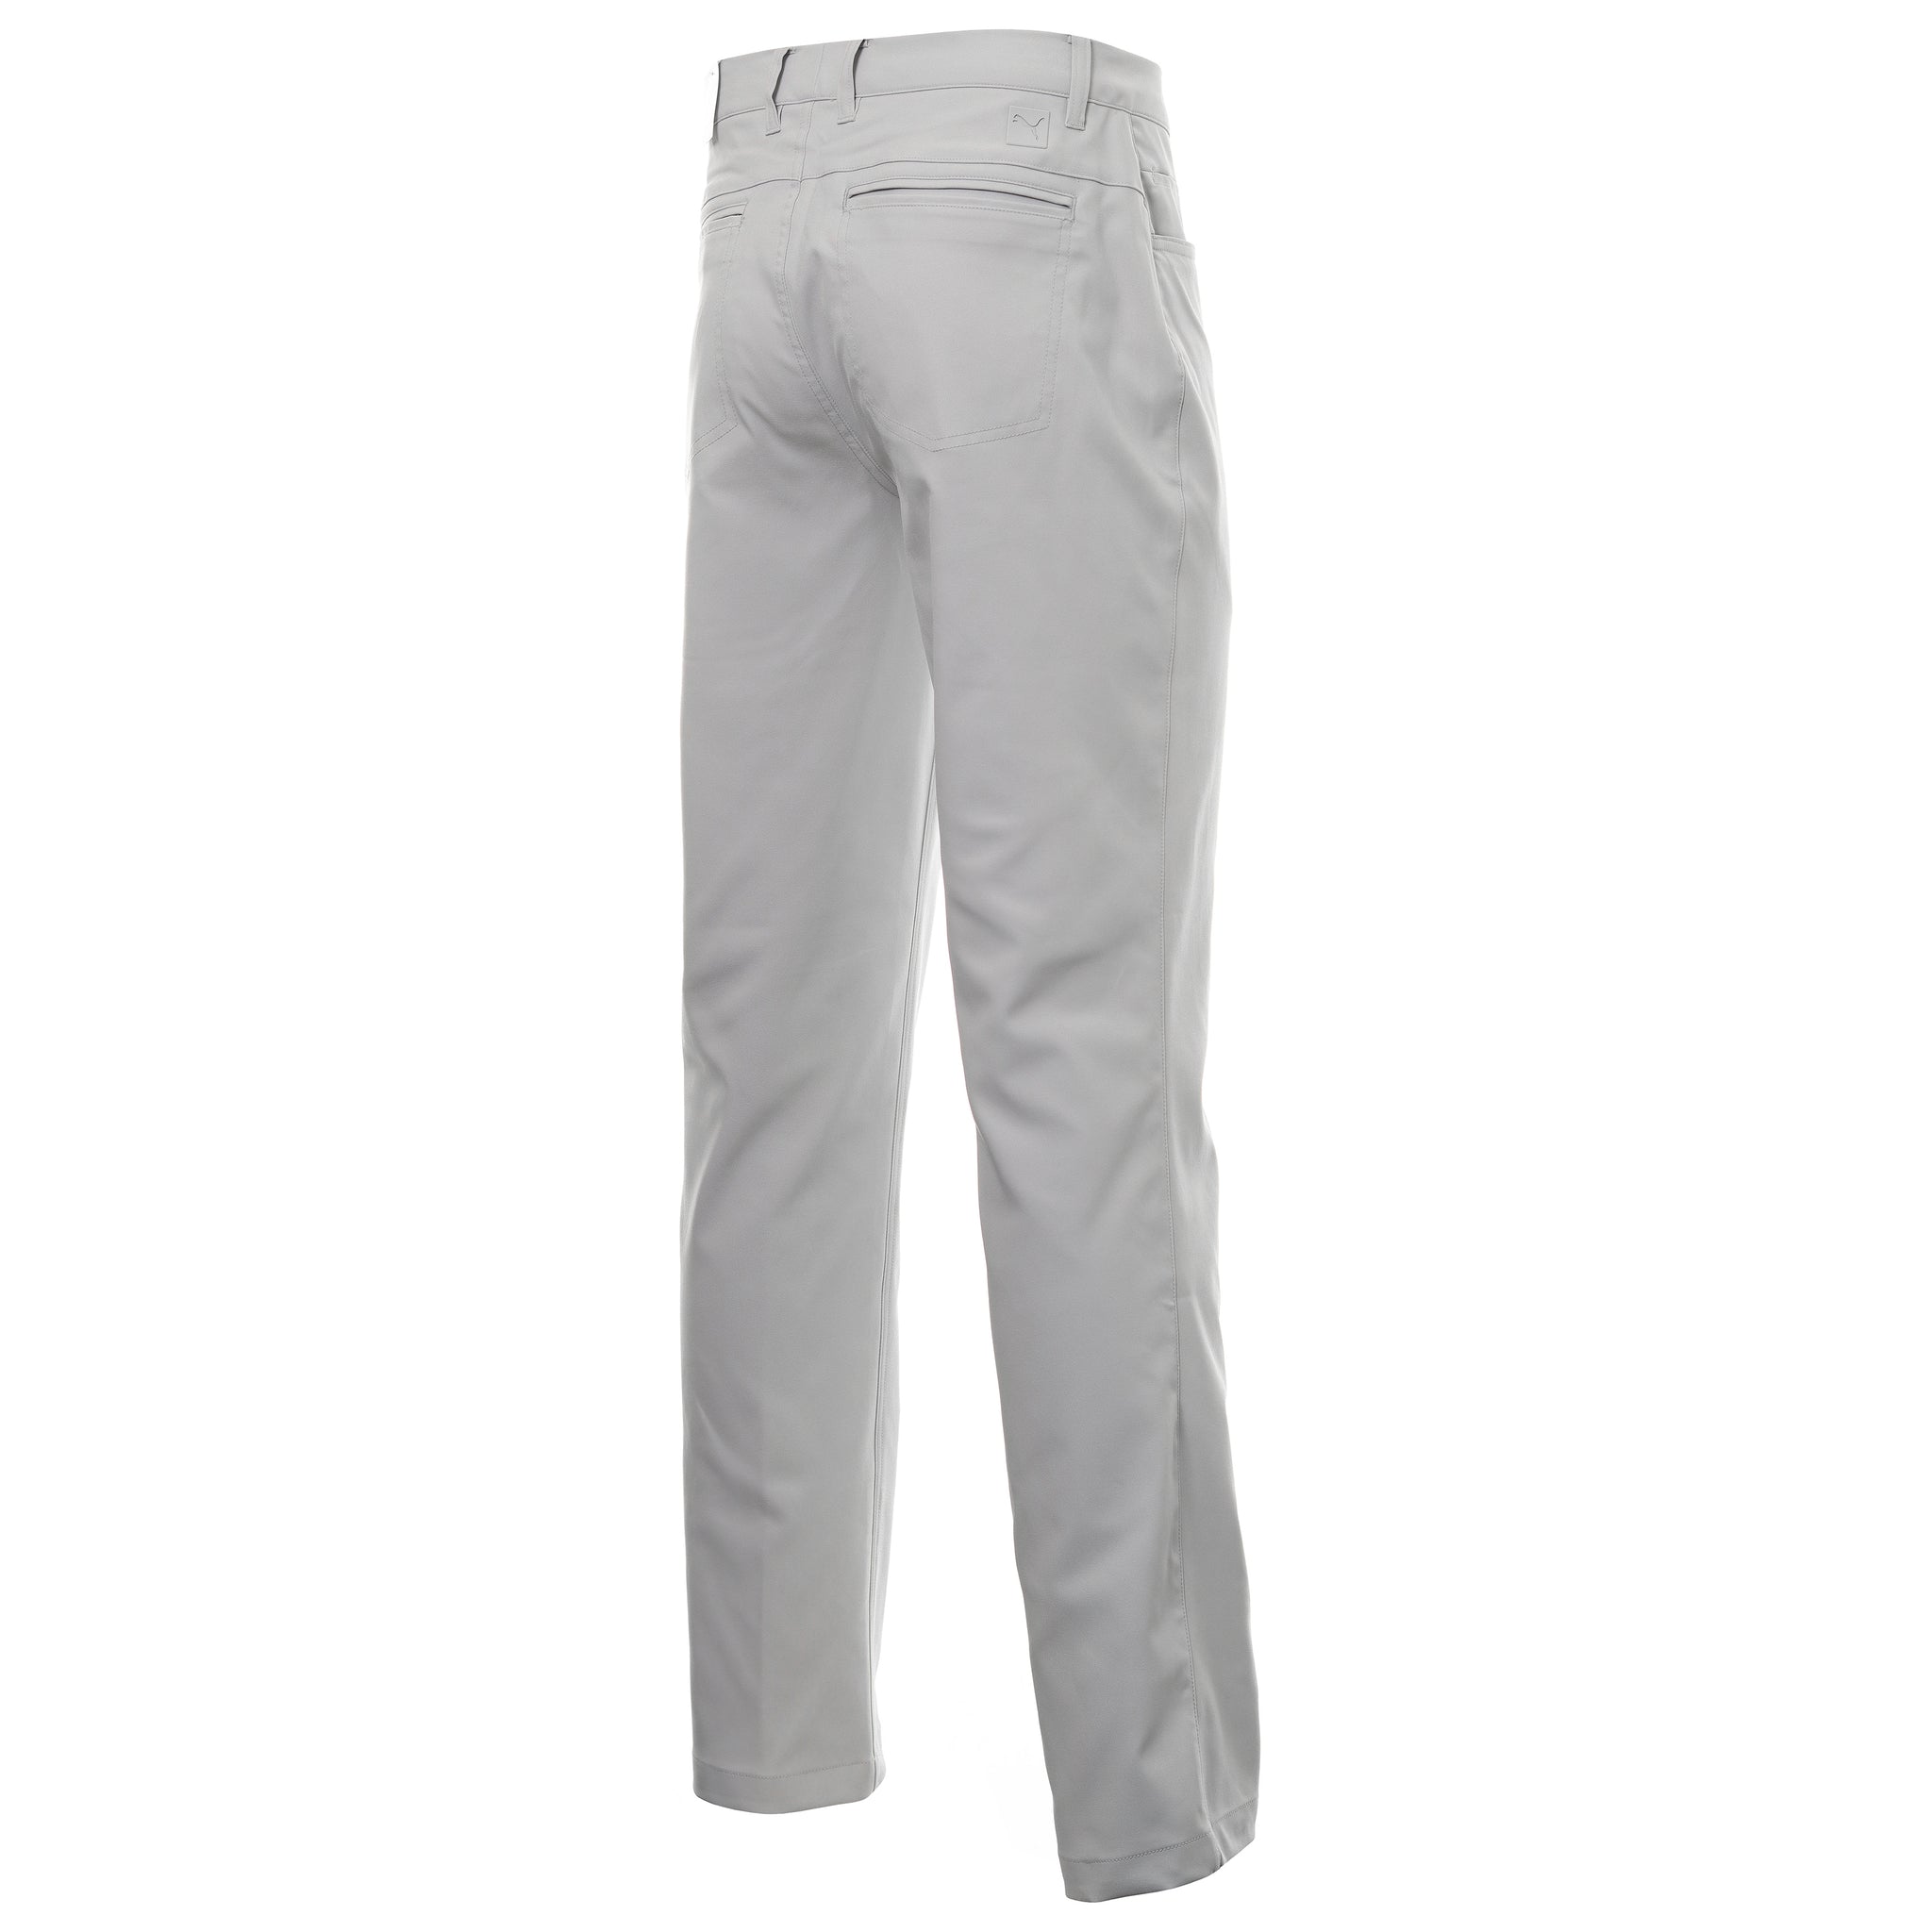 puma-golf-dealer-5-pocket-pant-535526-ash-grey-04